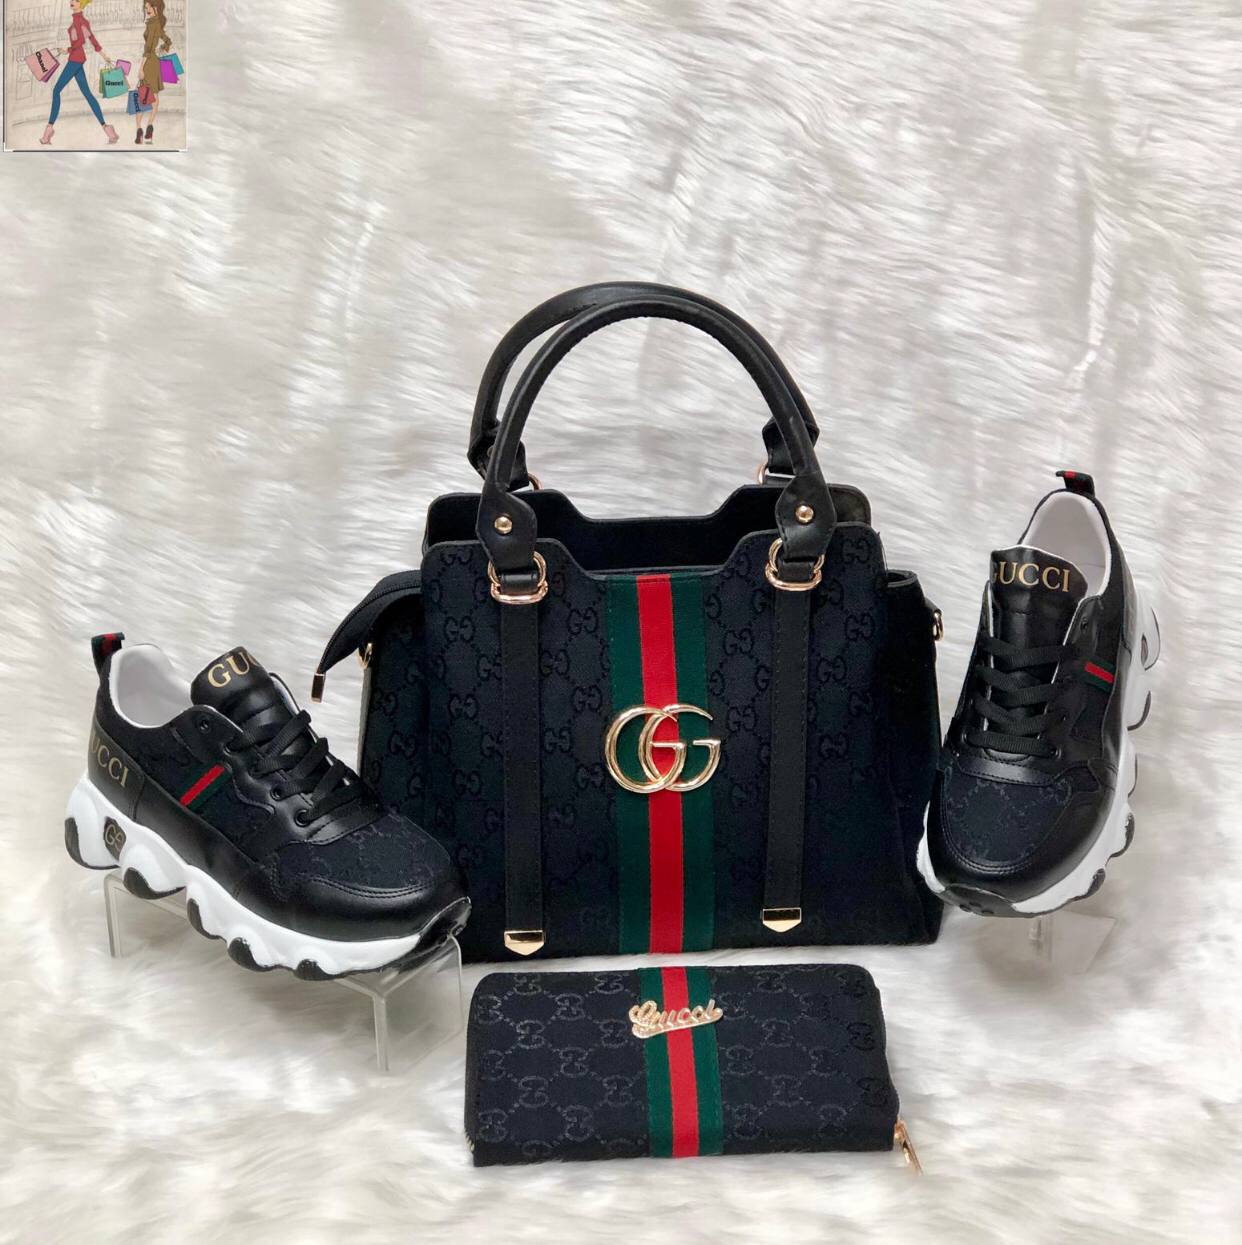 Gucci minion sneakers and handbag and wallet